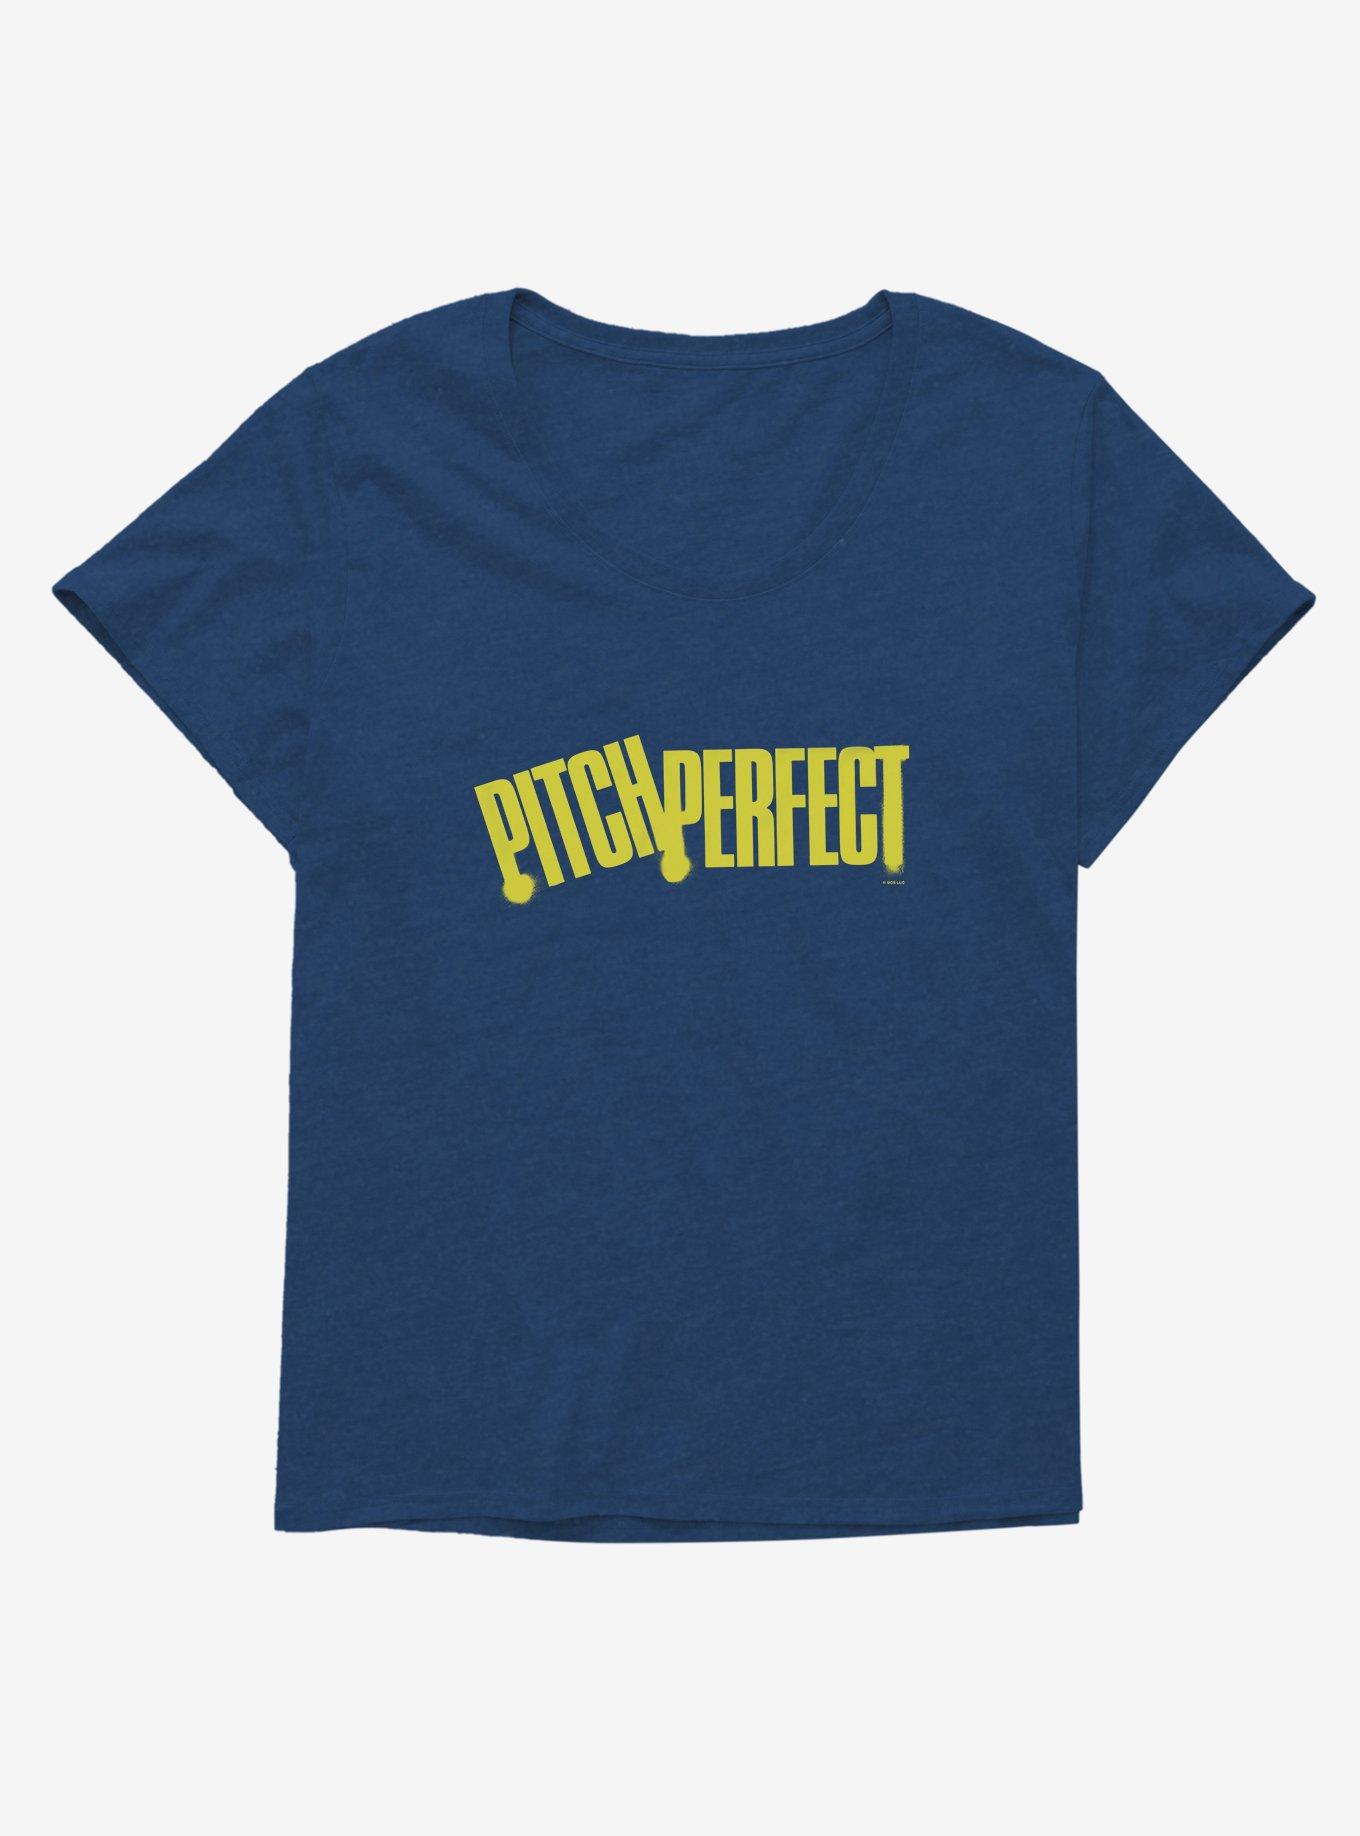 Pitch Perfect Logo Girls T-Shirt Plus